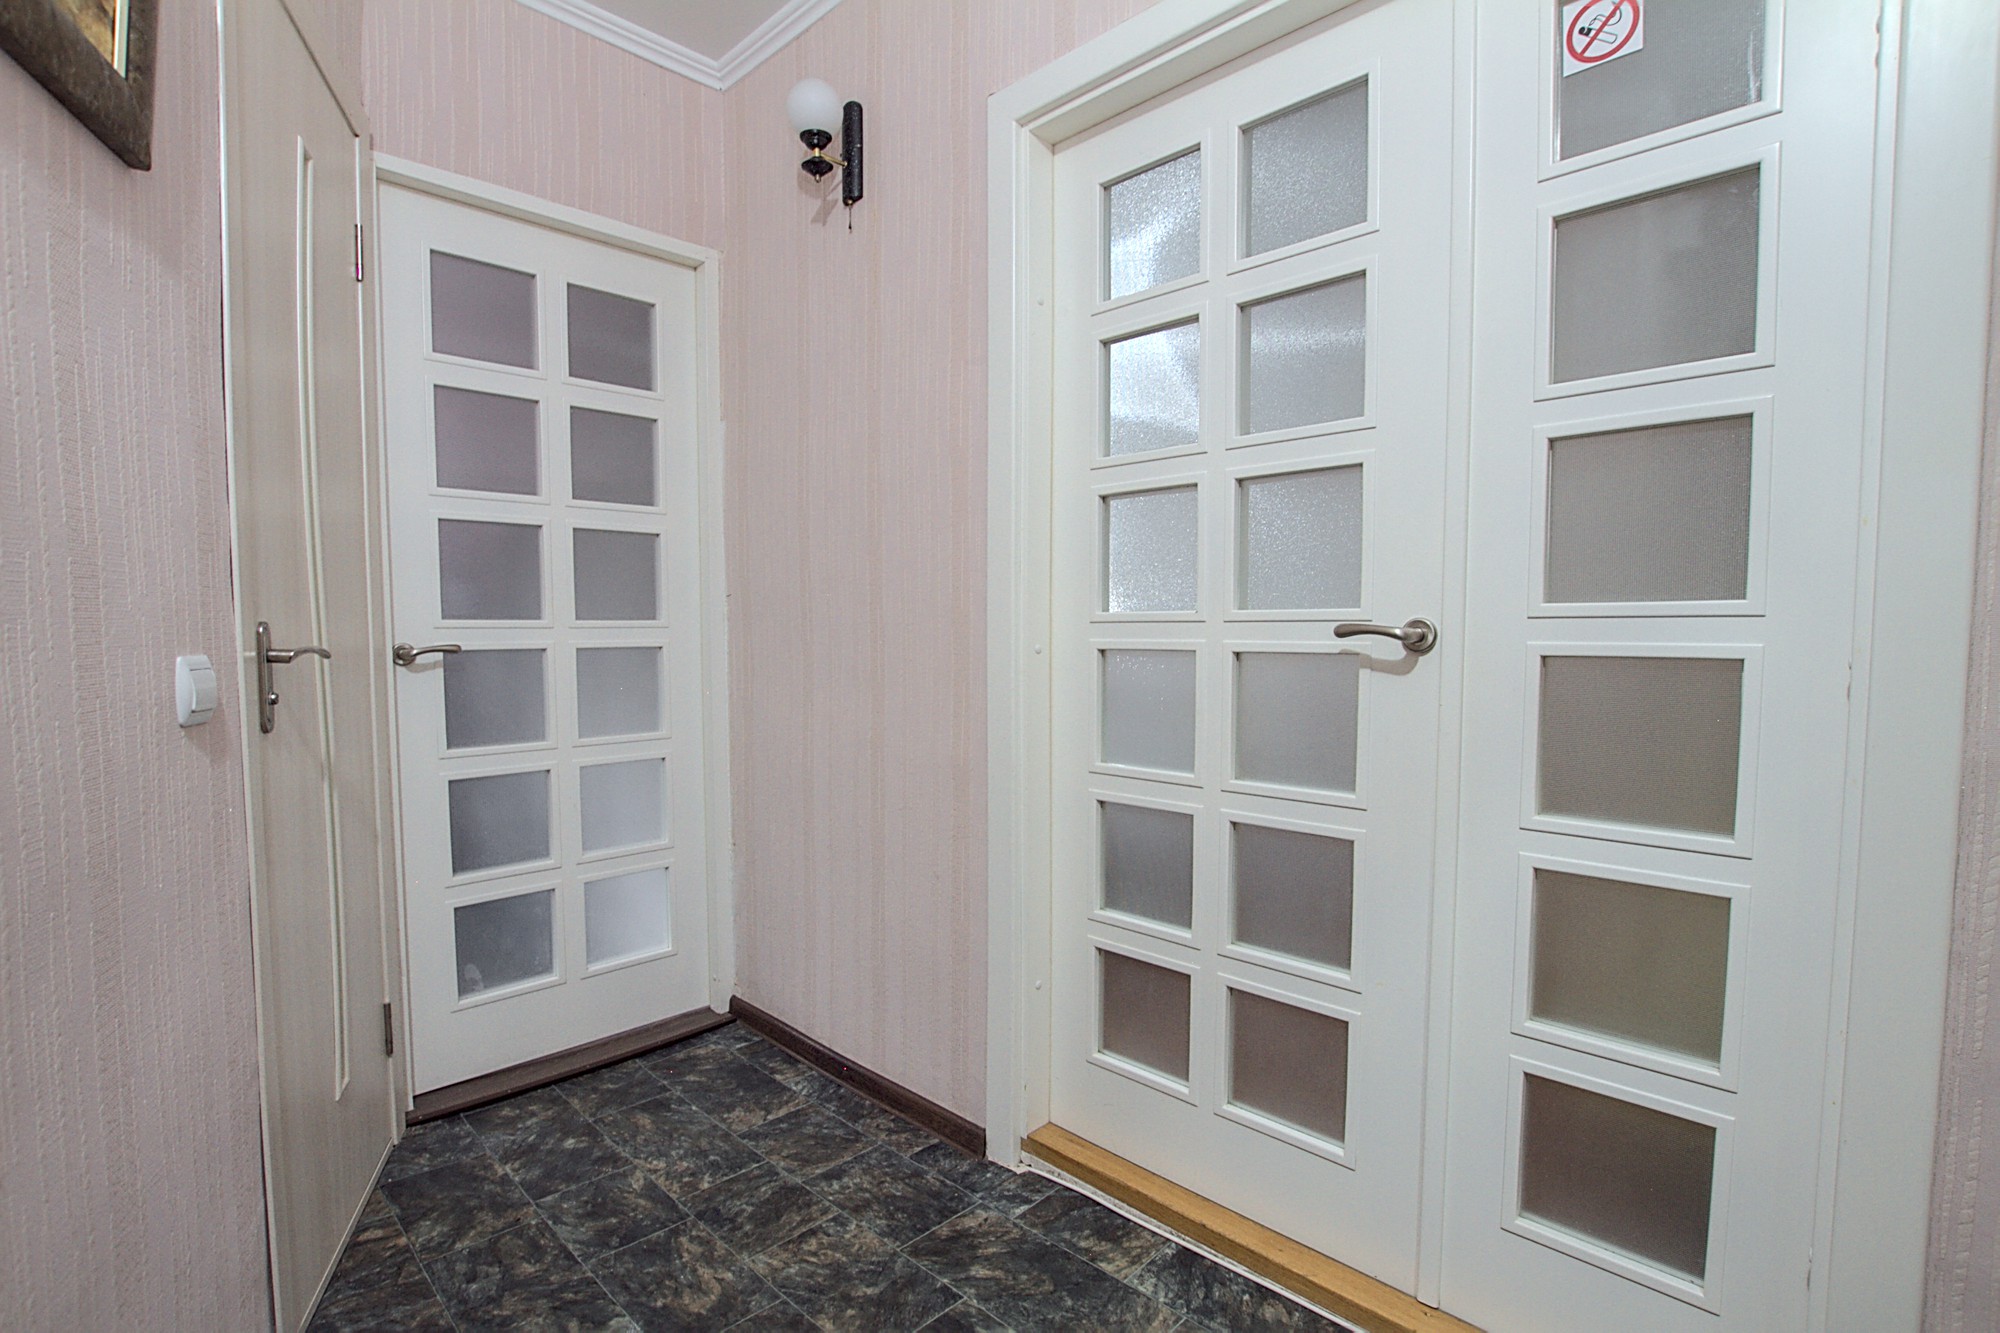 Chirie garsoniera ieftina in Chisinau: 1 cameră, 1 dormitor, 35 m²